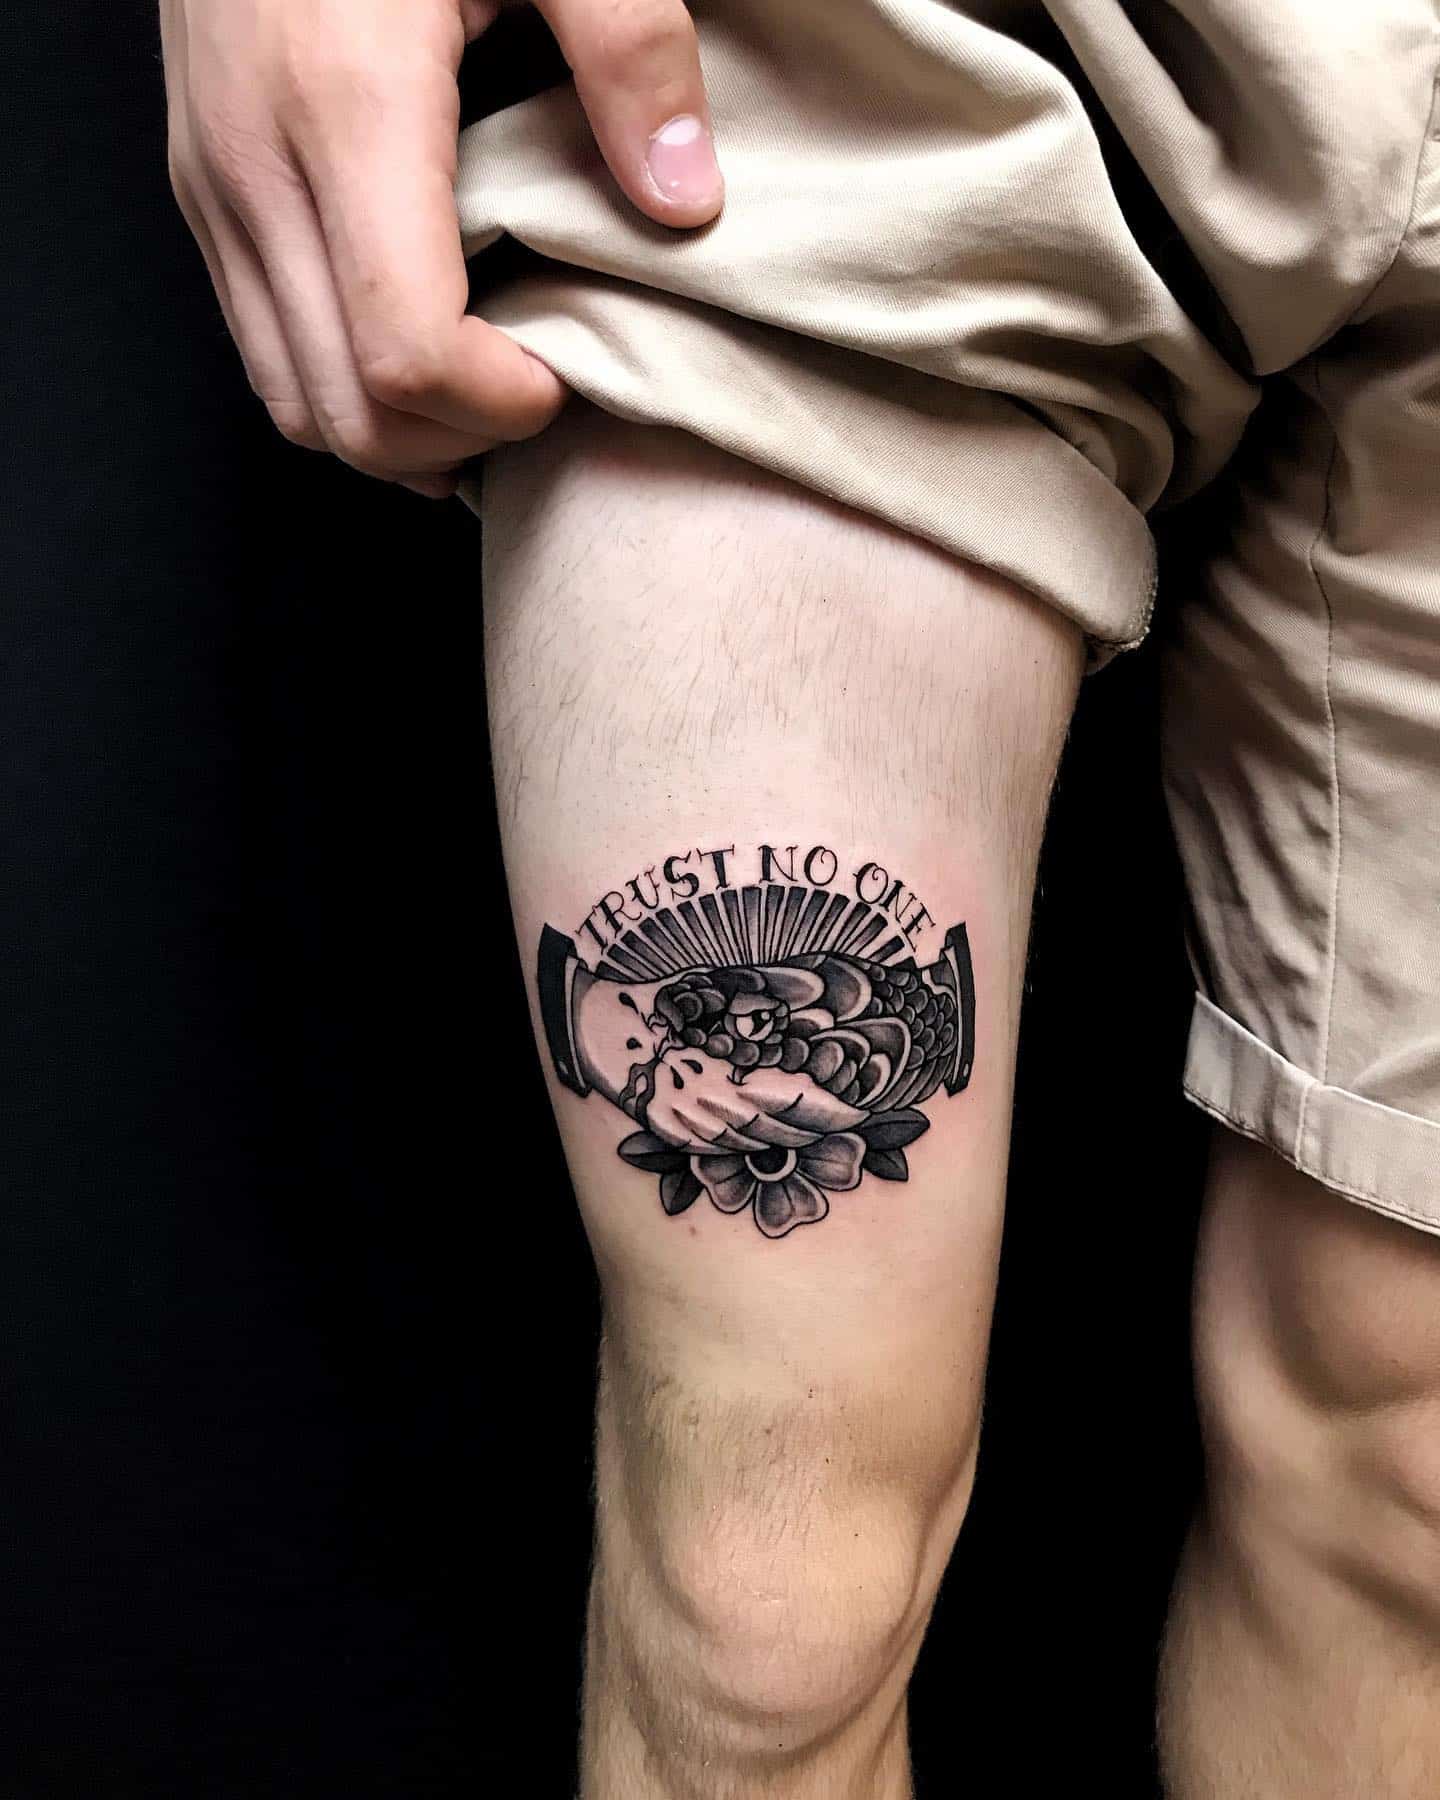 trust no one tattoo on the leg